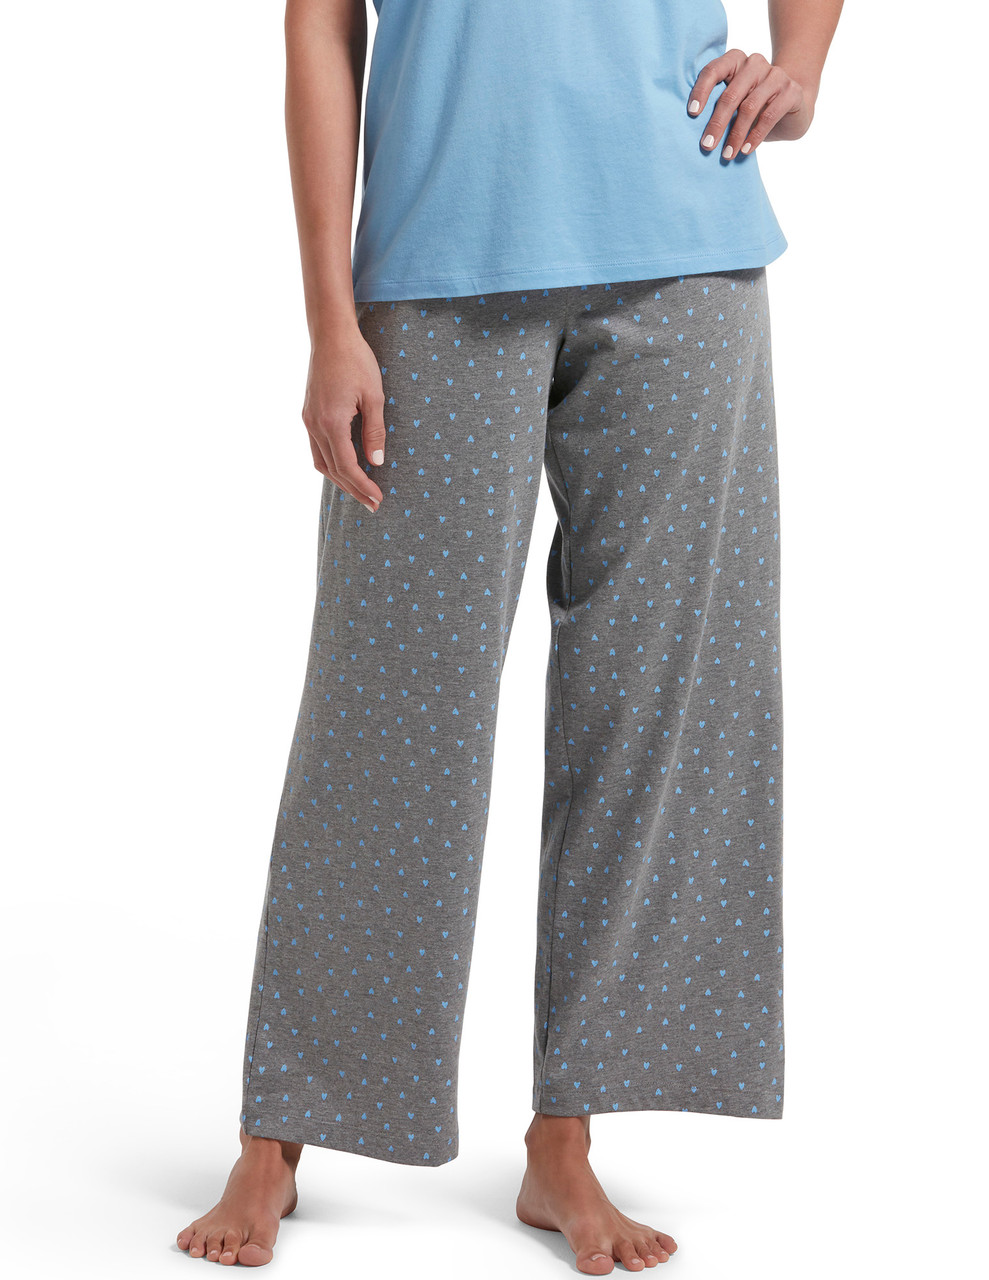 Sant + Abel Men's Blue Palm Tree Cotton Pajama Pants